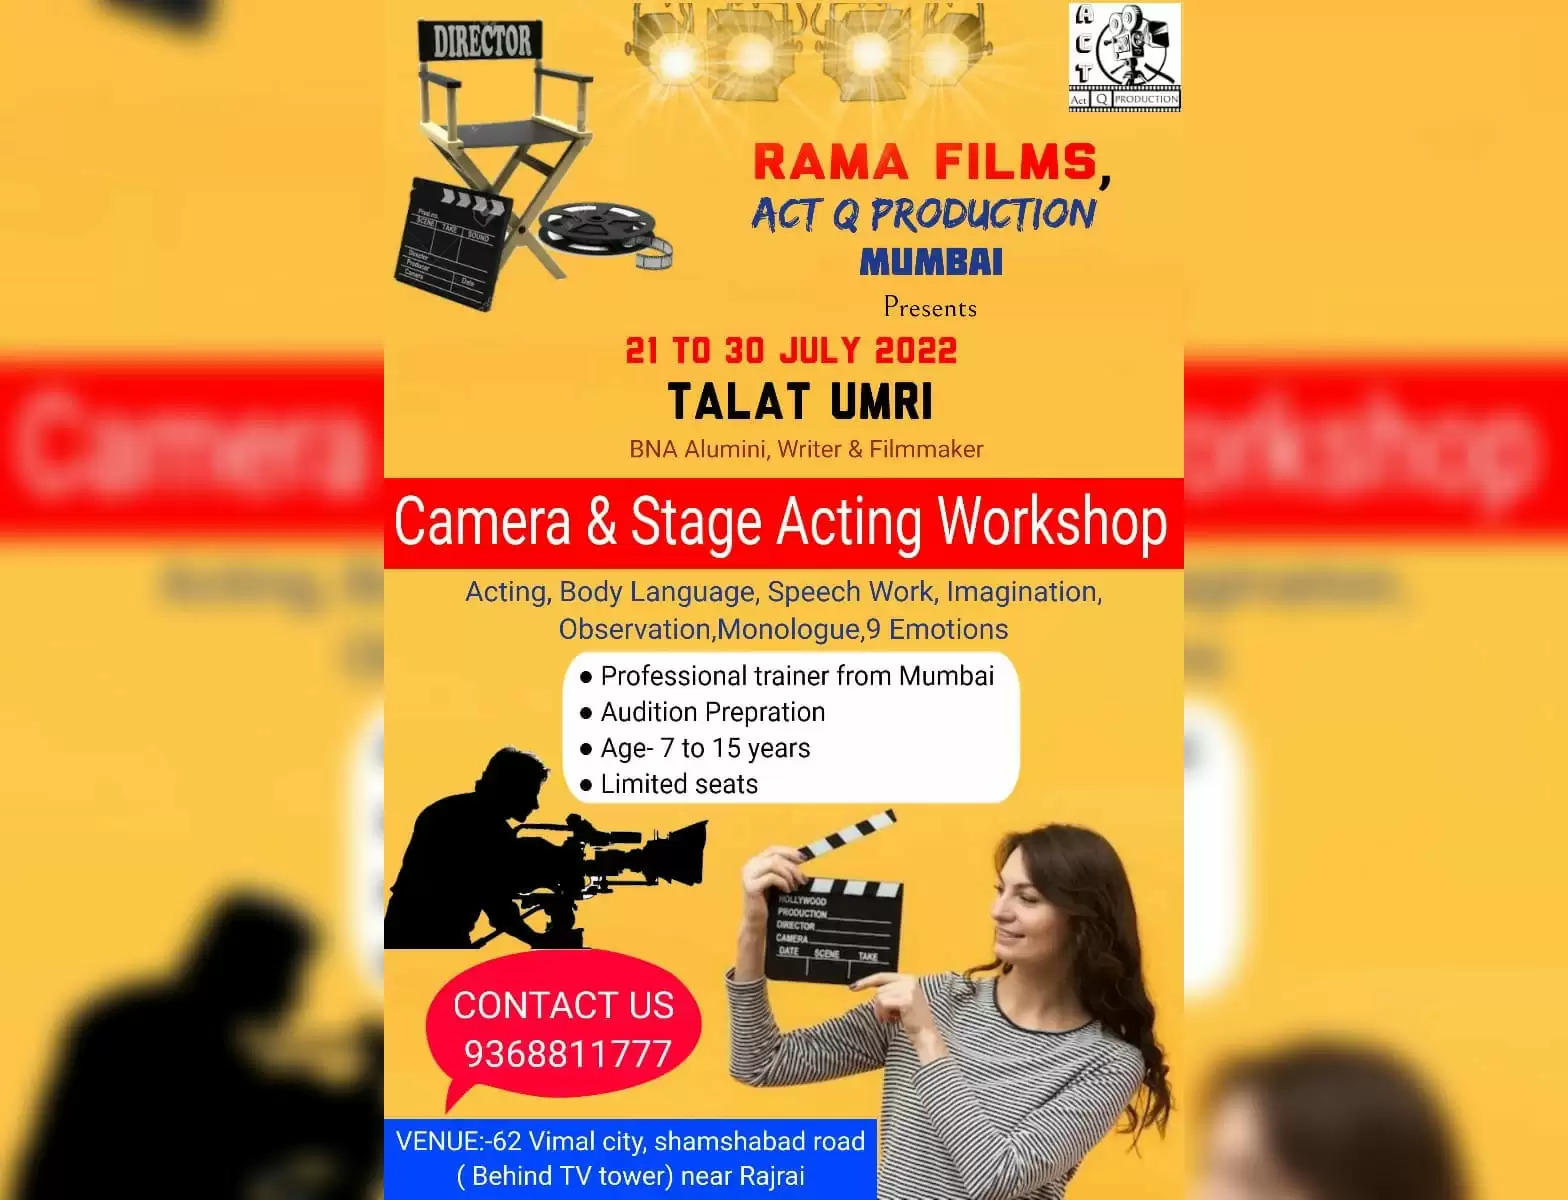 रामा फिल्म्स औऱ एक्ट क्यू फ़िल्म प्रोडक्शन की एक्टिंग वर्कशॉप 21 जुलाई से शुरू